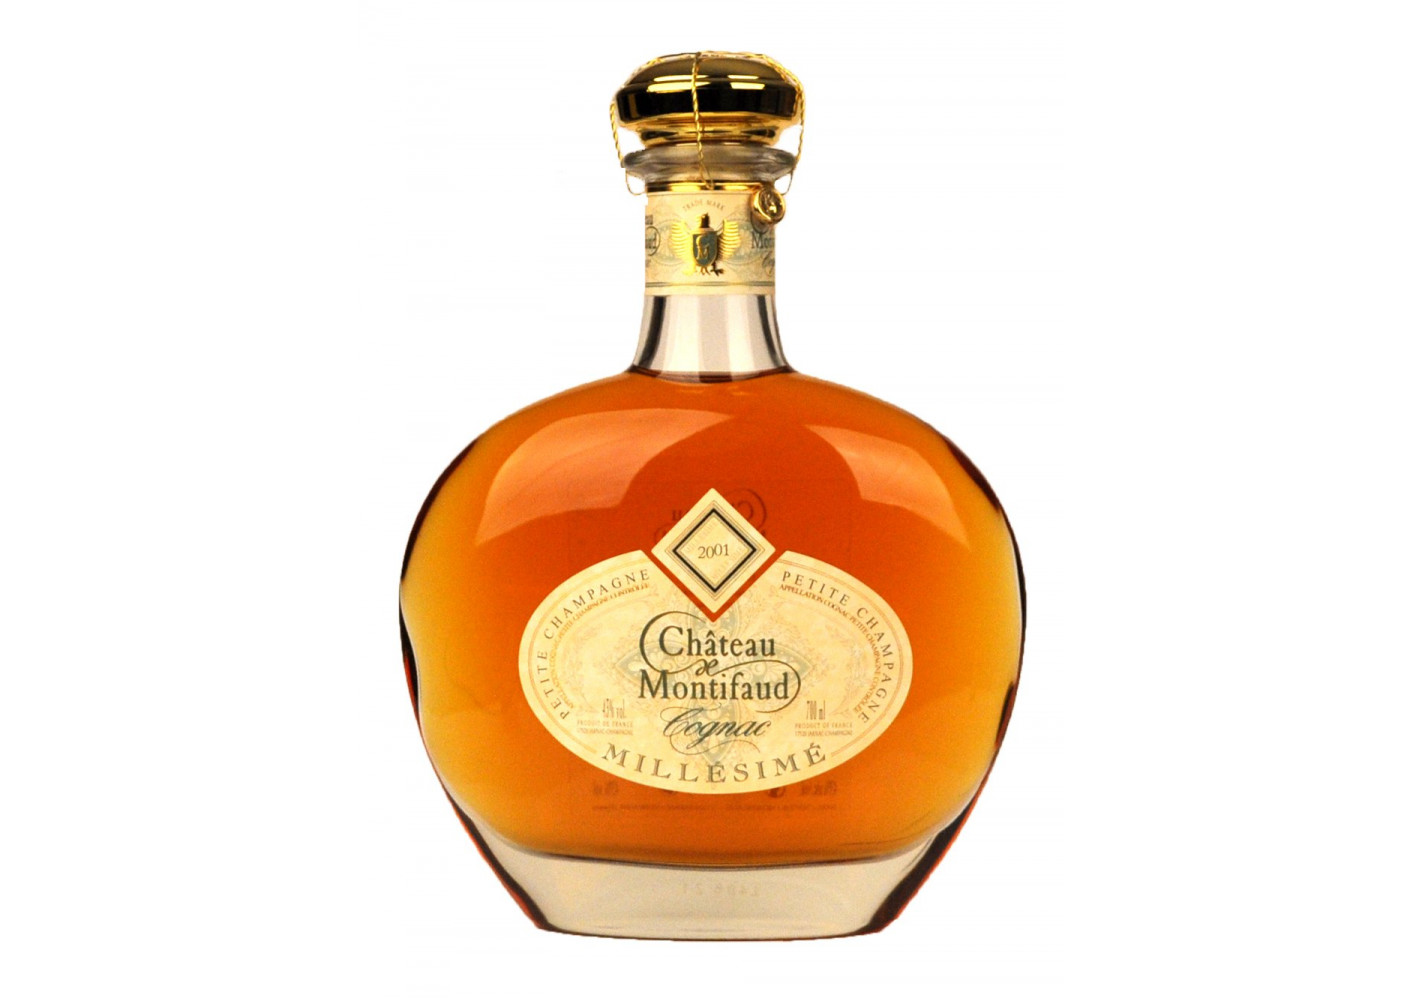 Montifaud cognac. Коньяк Шато монтифаунд Cognac. Chateau Montifaud Cognac Premium. Louis Royer VSOP. Шато де Монтифо замок.